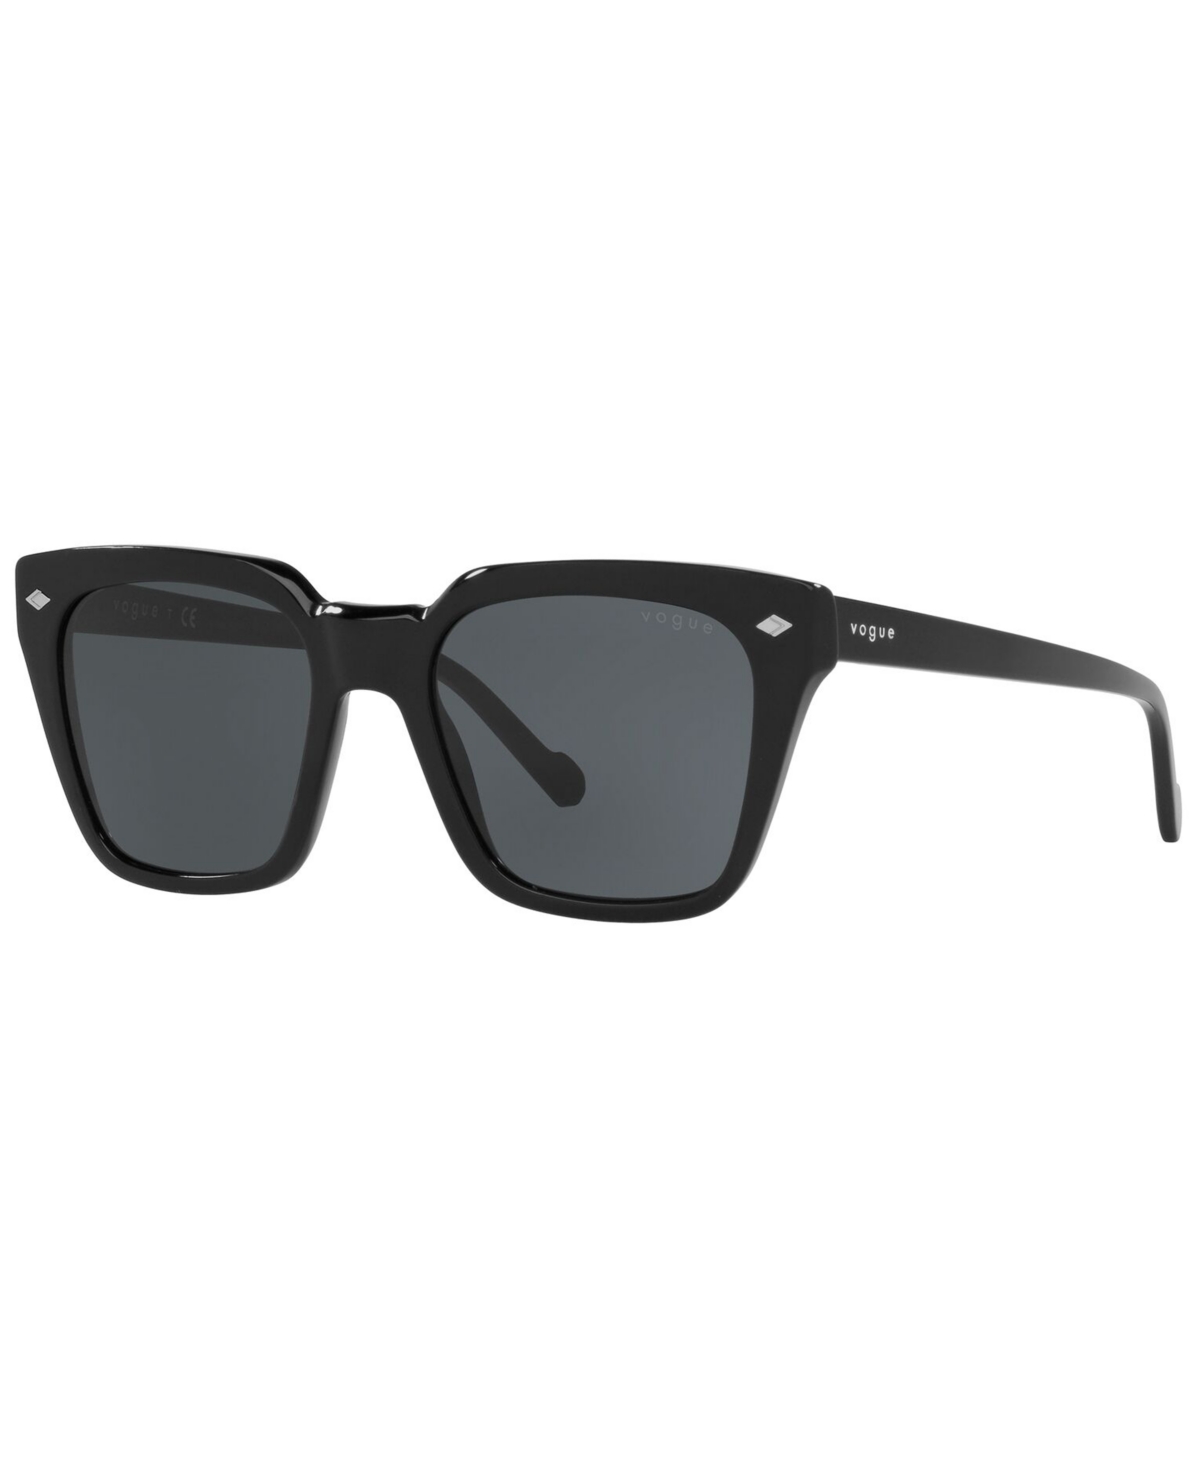 Men's Sunglasses, VO5380S 50 - DARK HAVANA/DARK BROWN